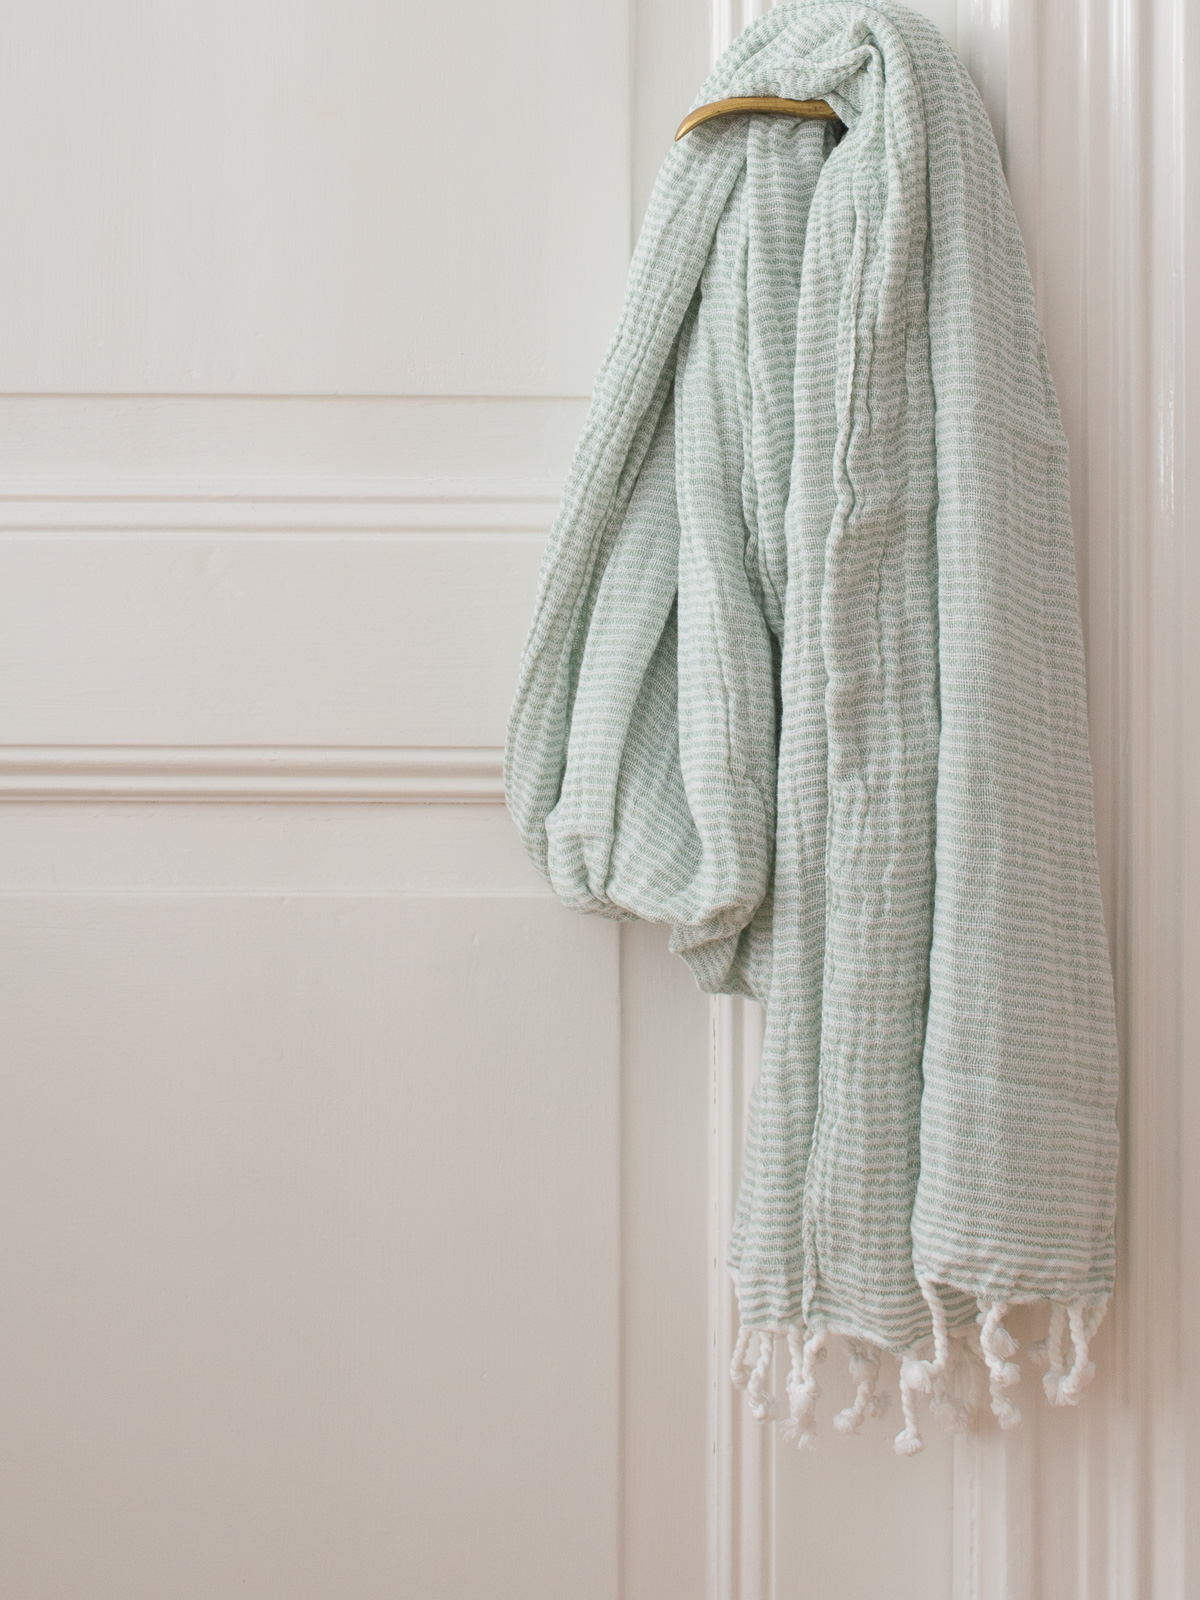 hammam towel double layered grey-green